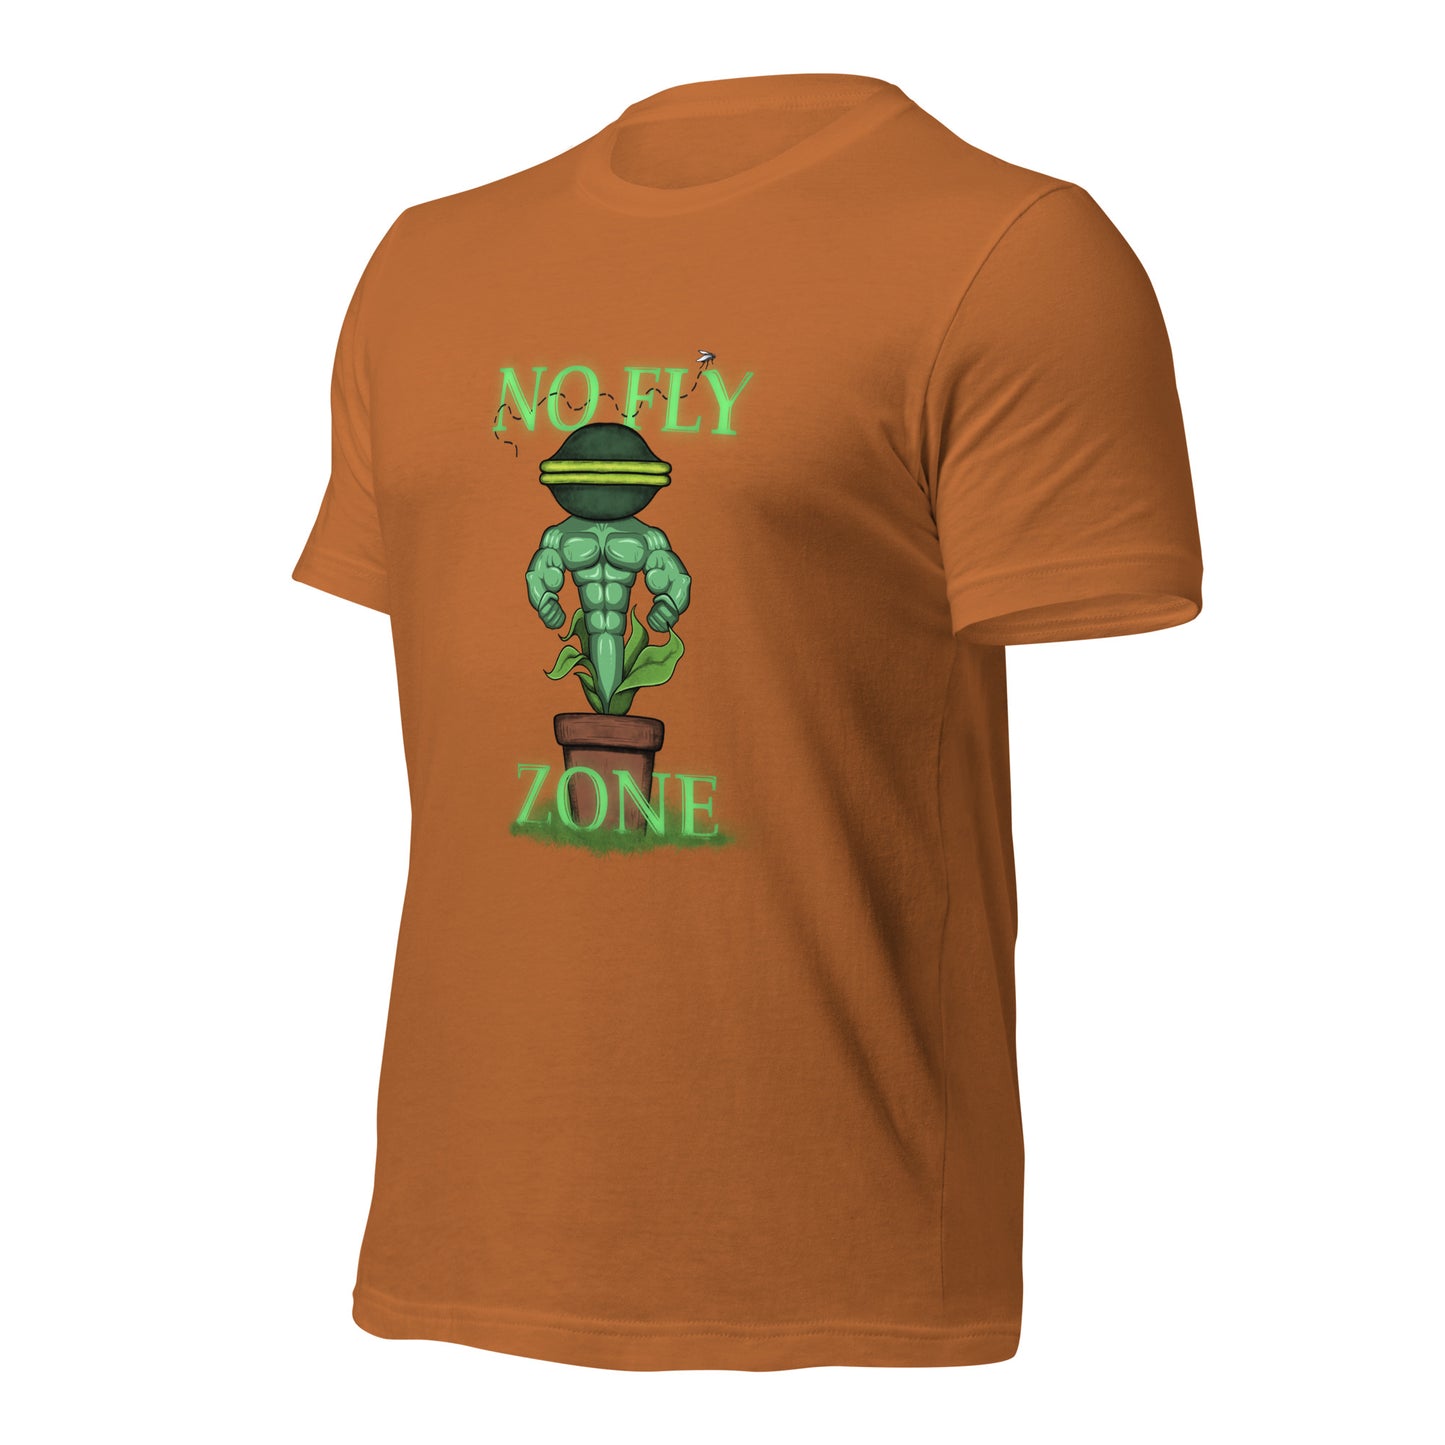 Venus Fly Trap (Unisex t-shirt)